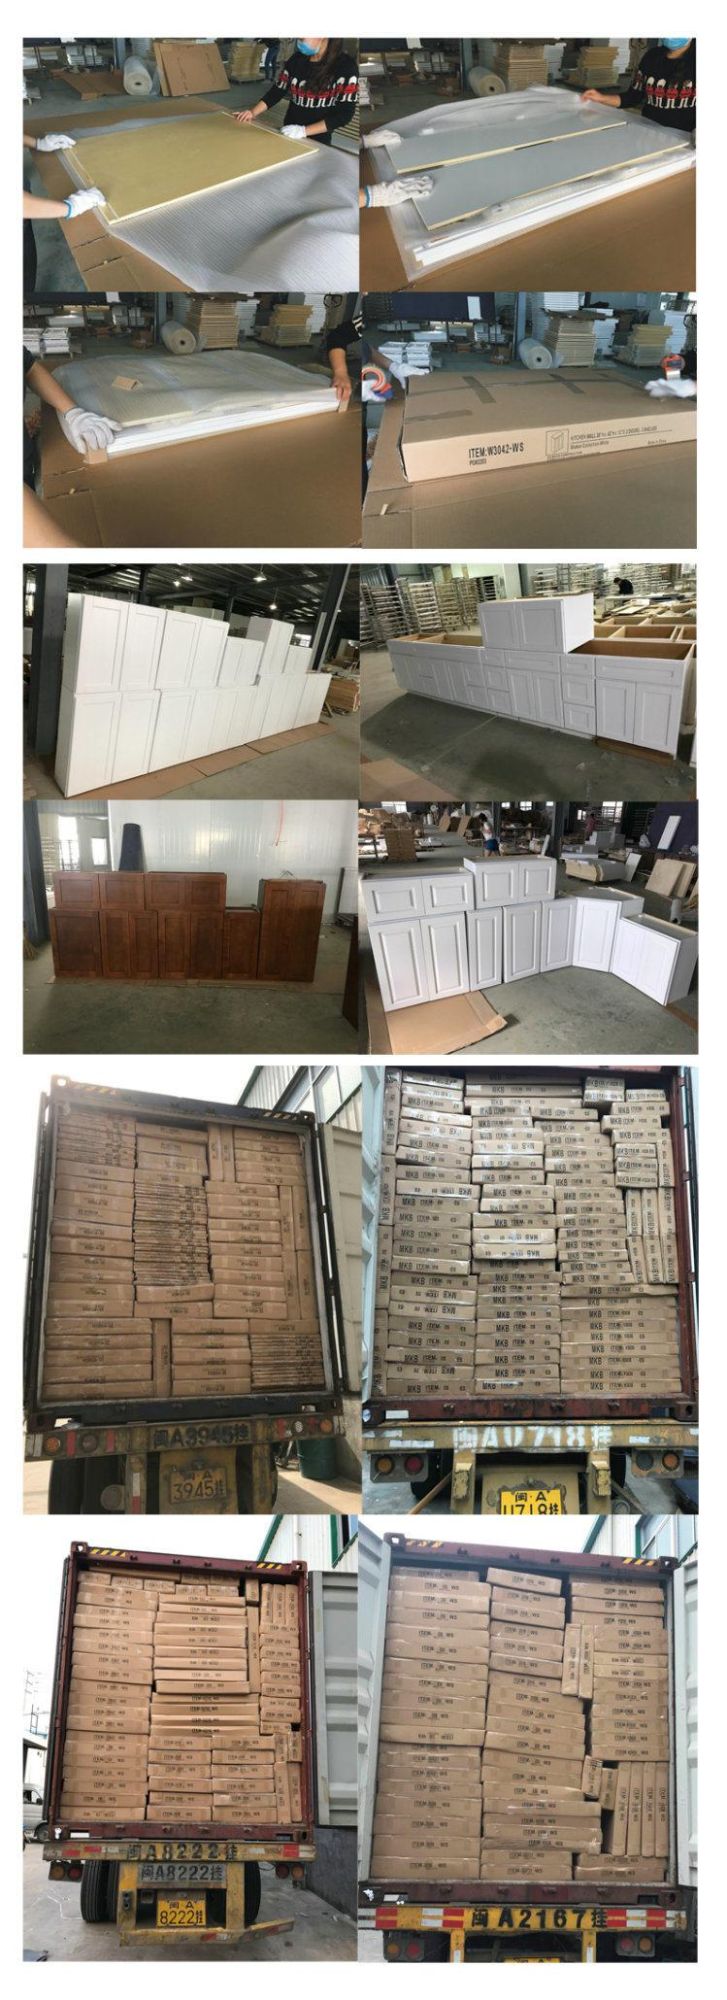 Fuzhou Manufacture Modern White Lacquer Wood Kitchen Cabinet